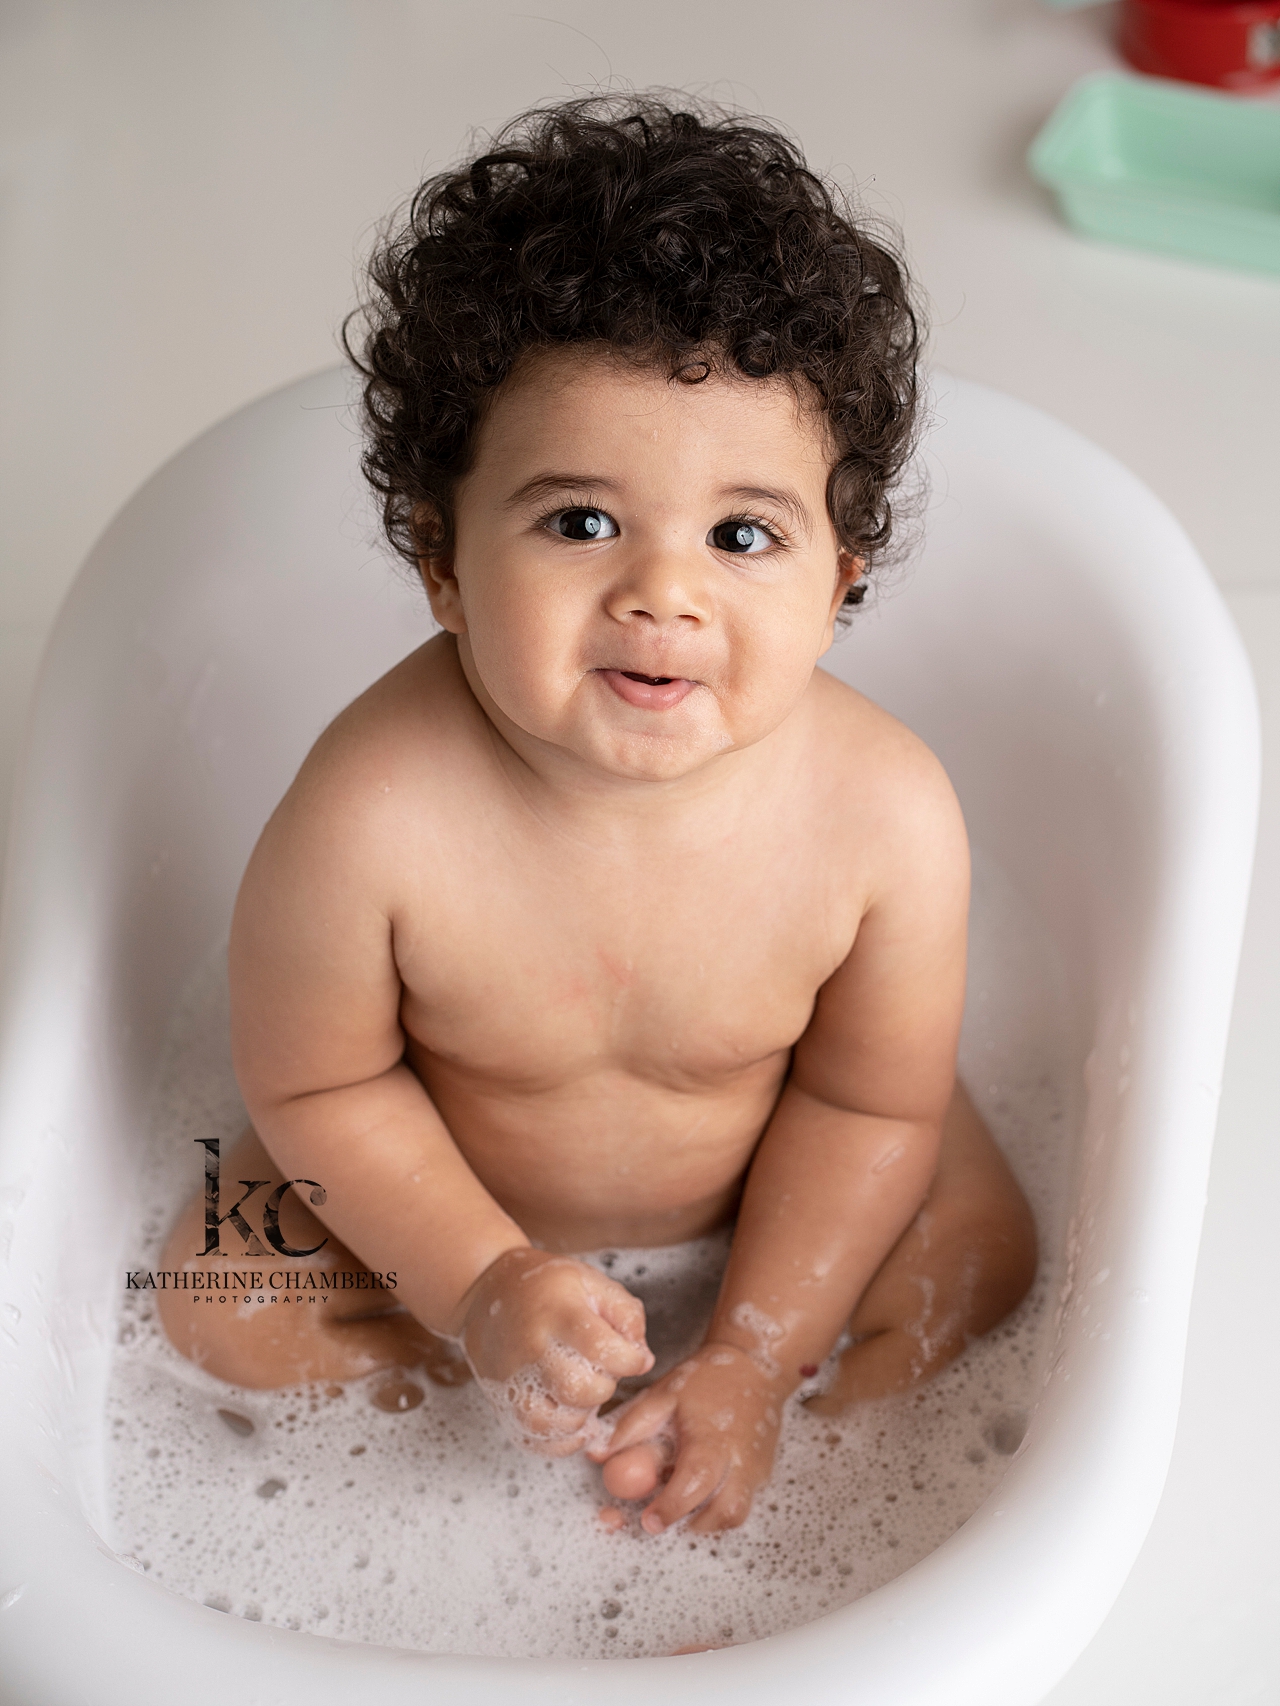 Bath Tub Splash Photography